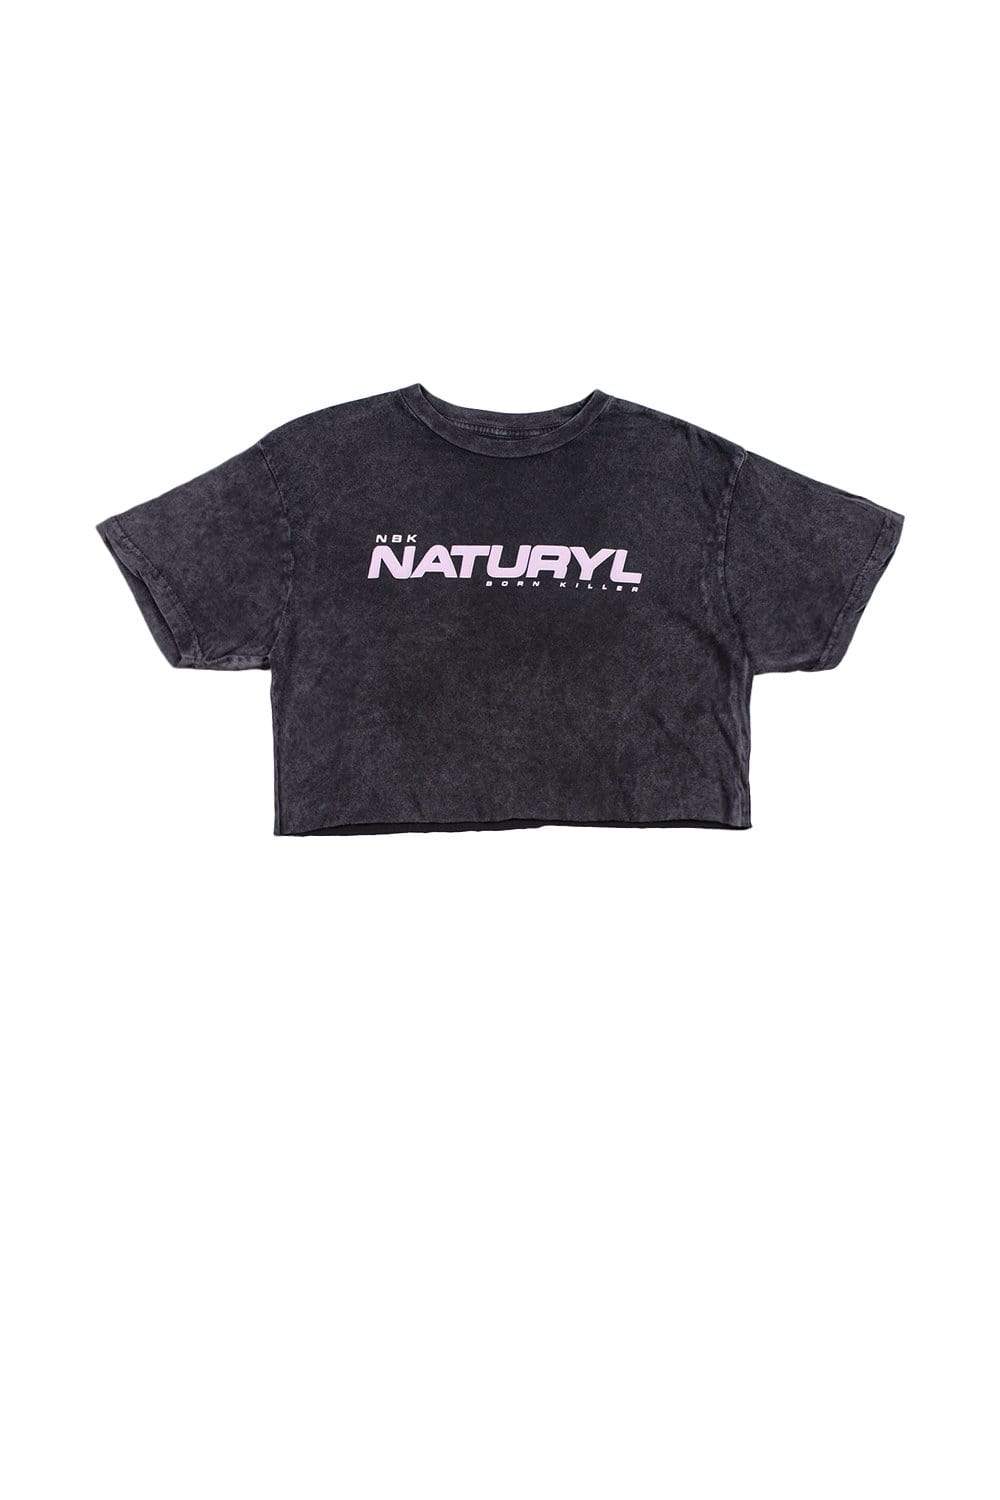 Naturyl Vintage Black Crop by Niykee Heaton – fanjoydkospa.co